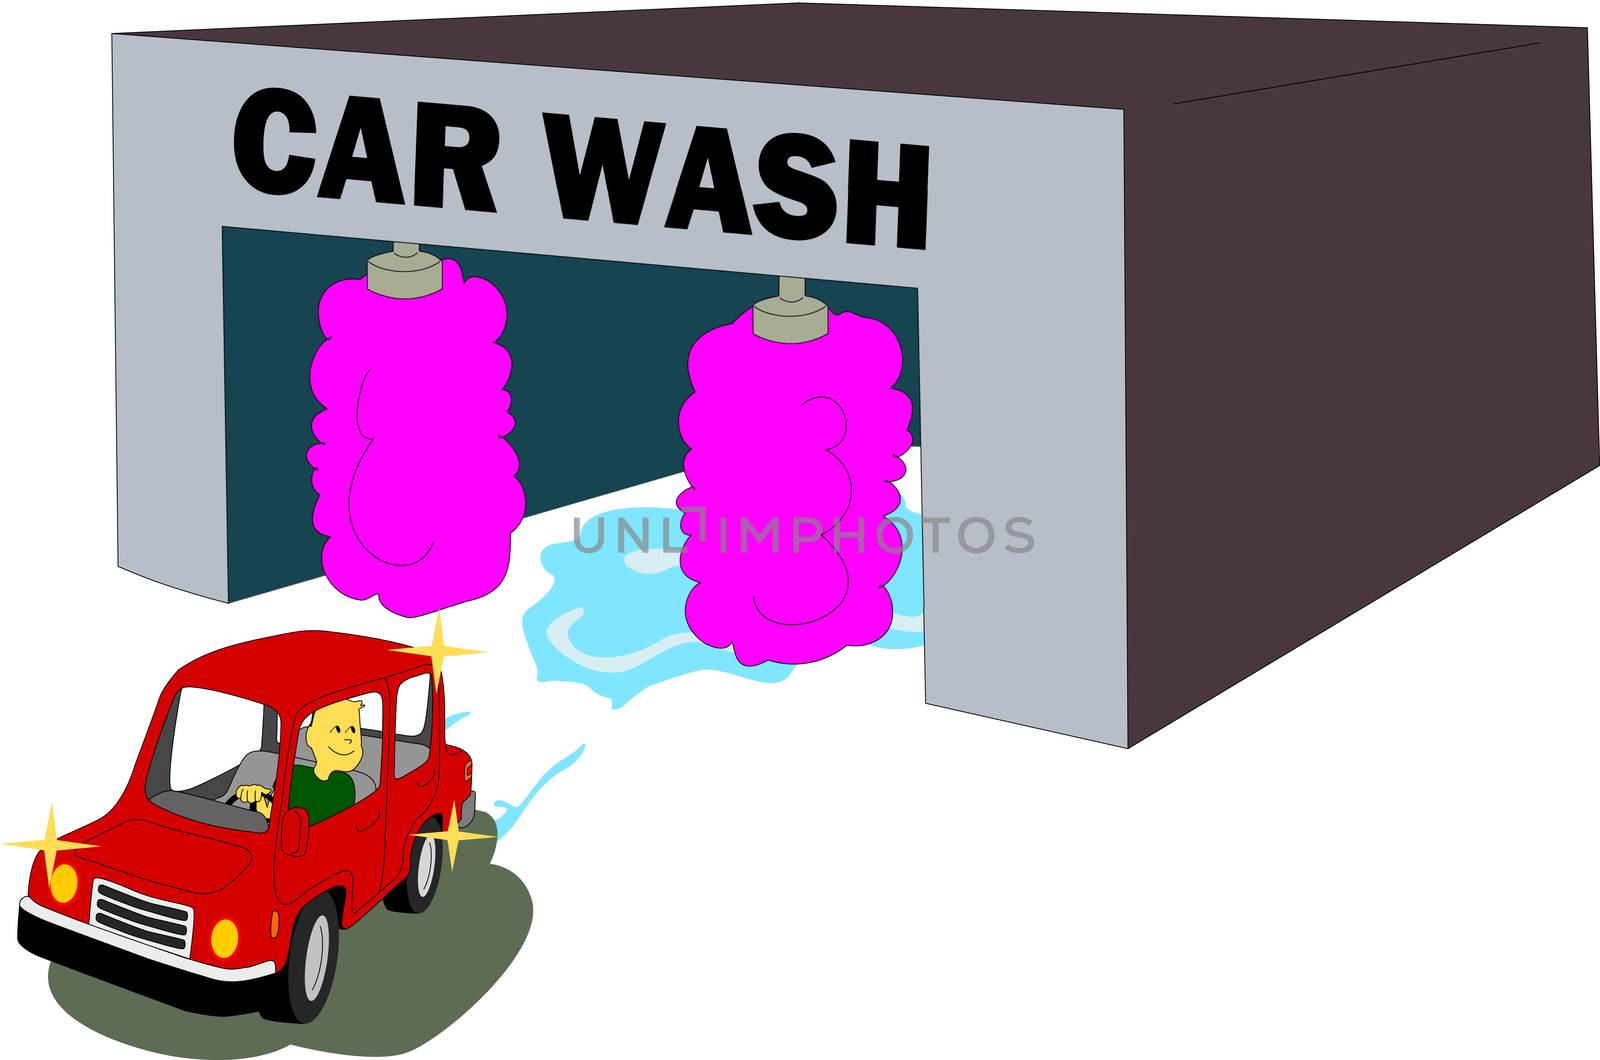 Car Wash by trrent